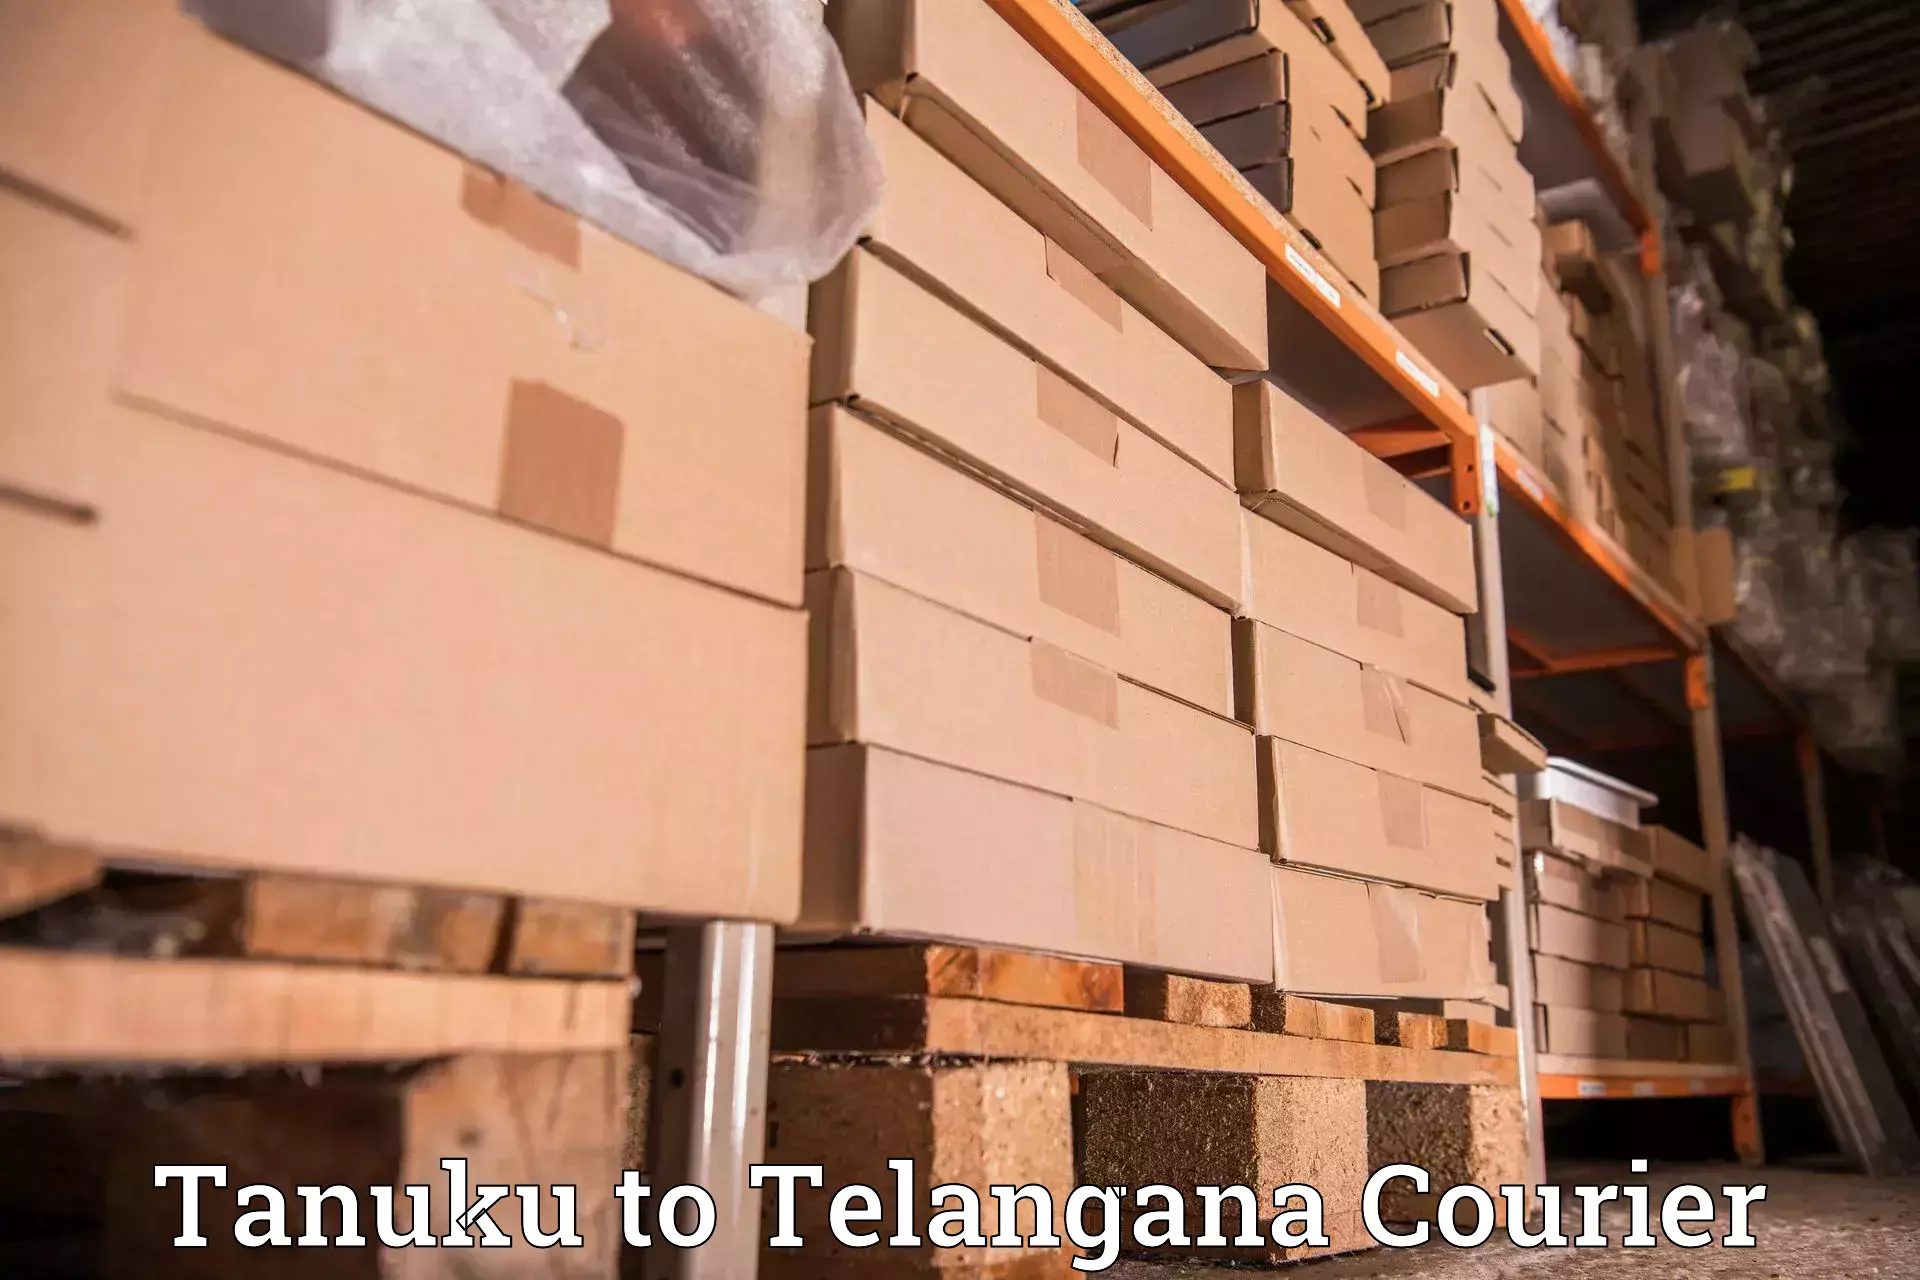 Courier membership in Tanuku to Adilabad